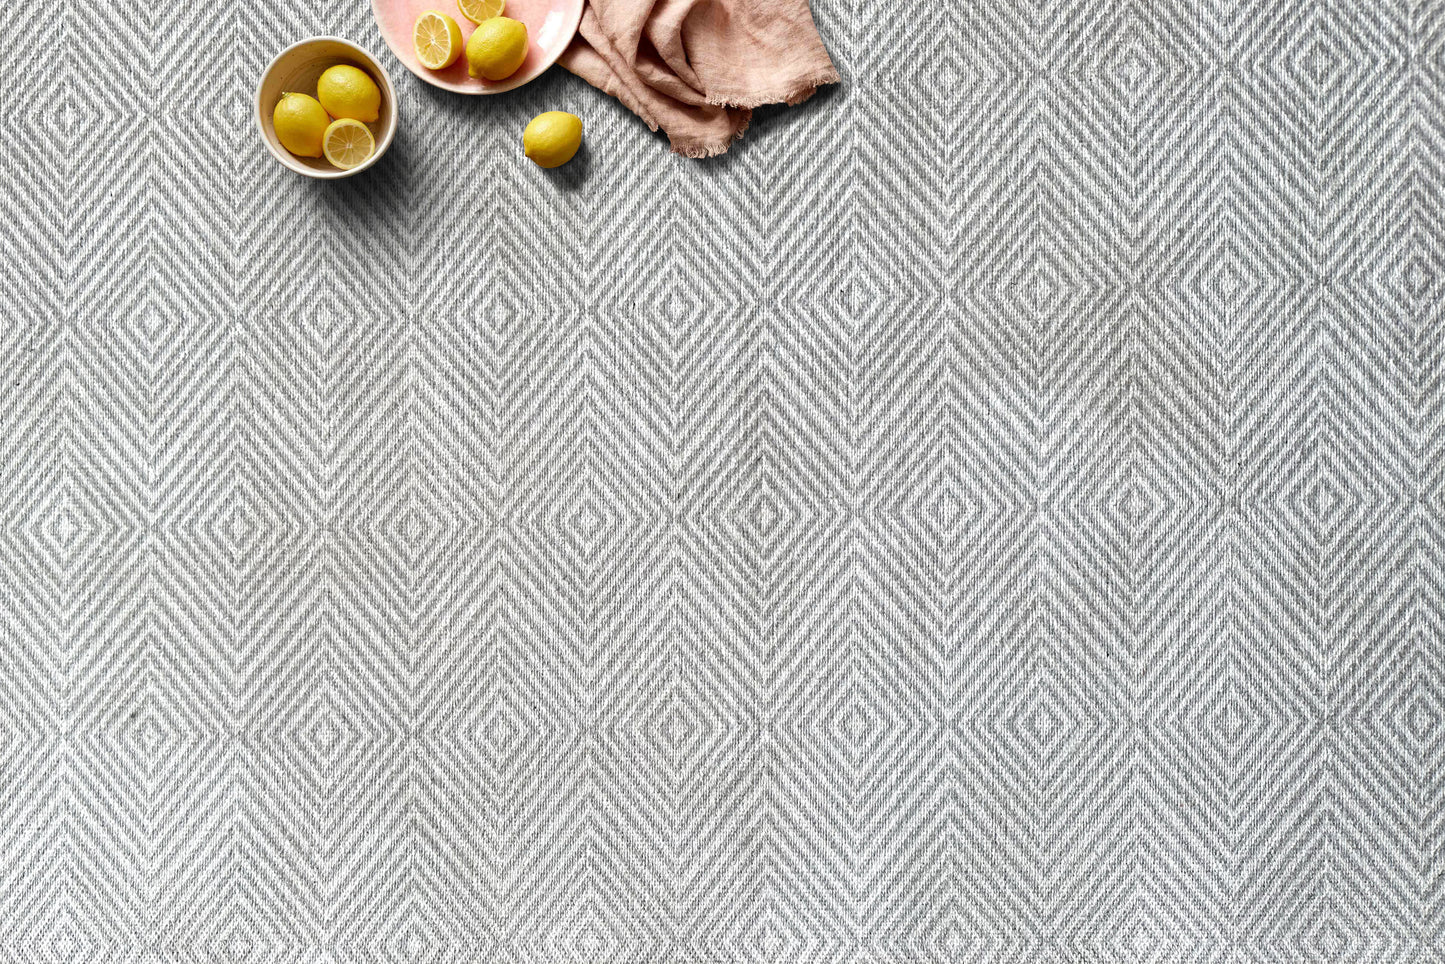 Modern Turkish Rug, Pastel Vintage Inspired Geometric Cream Oversized Area Rugs for Home Living room Bedroom Bathroom Kitchen